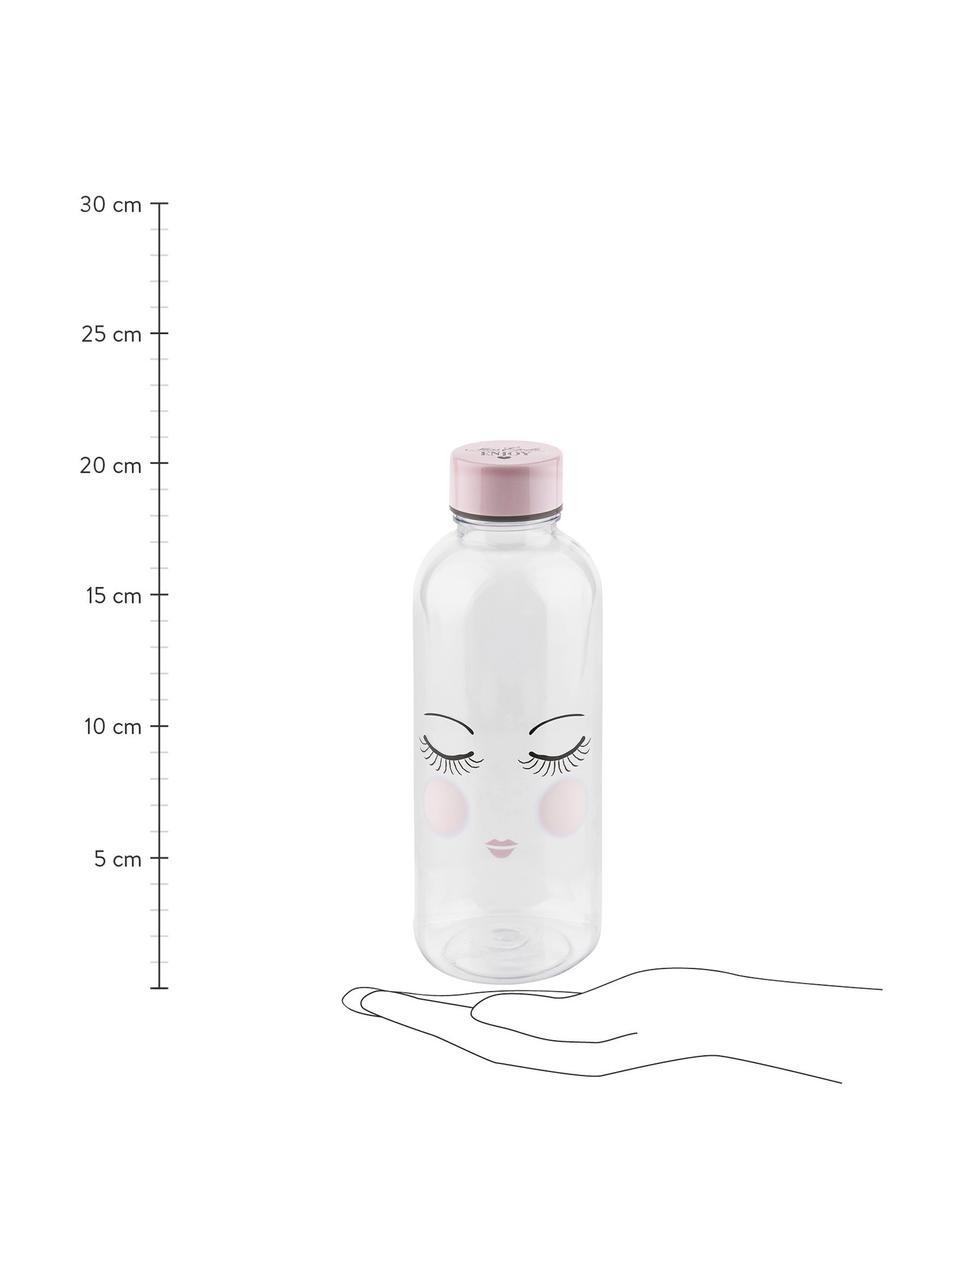 Drinkfles Les Yeux, Kunststof, vrij van BPA, BPS en ftalaten, Fles: transparant, roze, zwart. Dop: roze, Ø 8 x H 21 cm